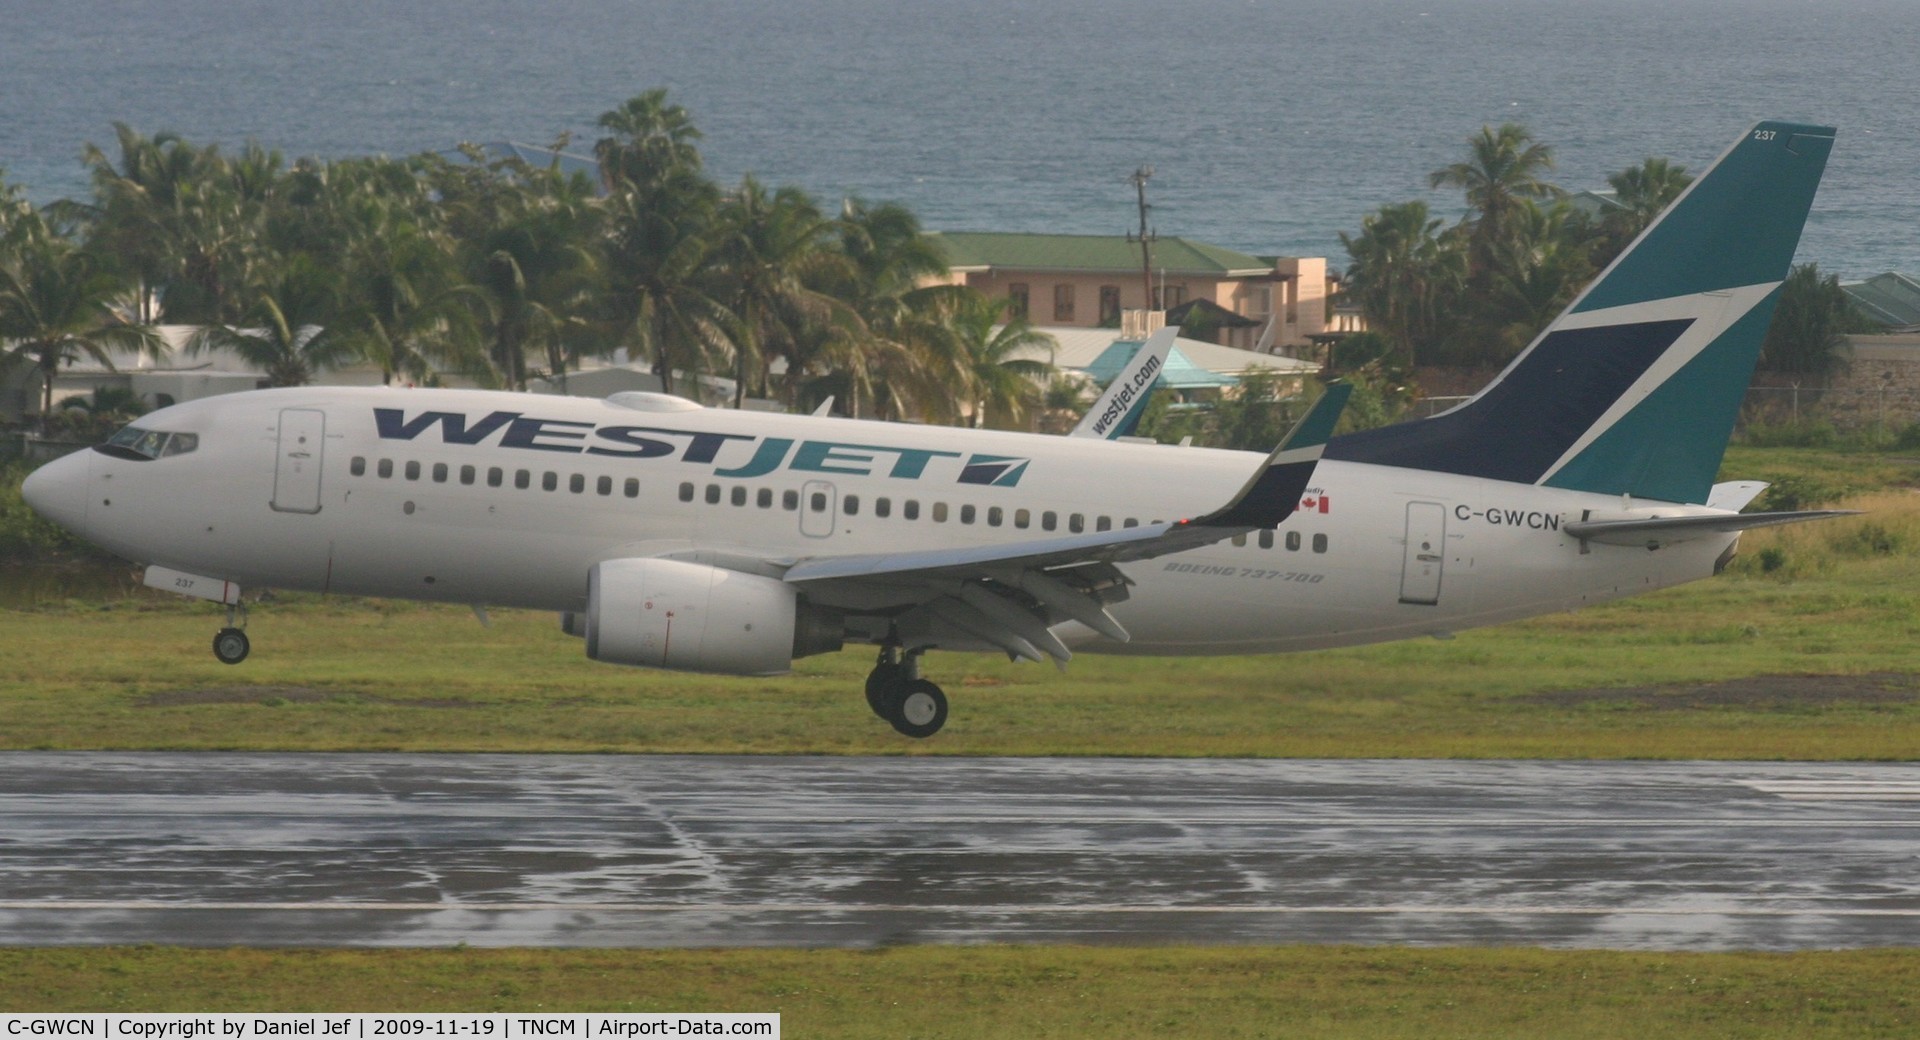 C-GWCN, 2005 Boeing 737-7CT C/N 34157, West jet landing at St Maarten